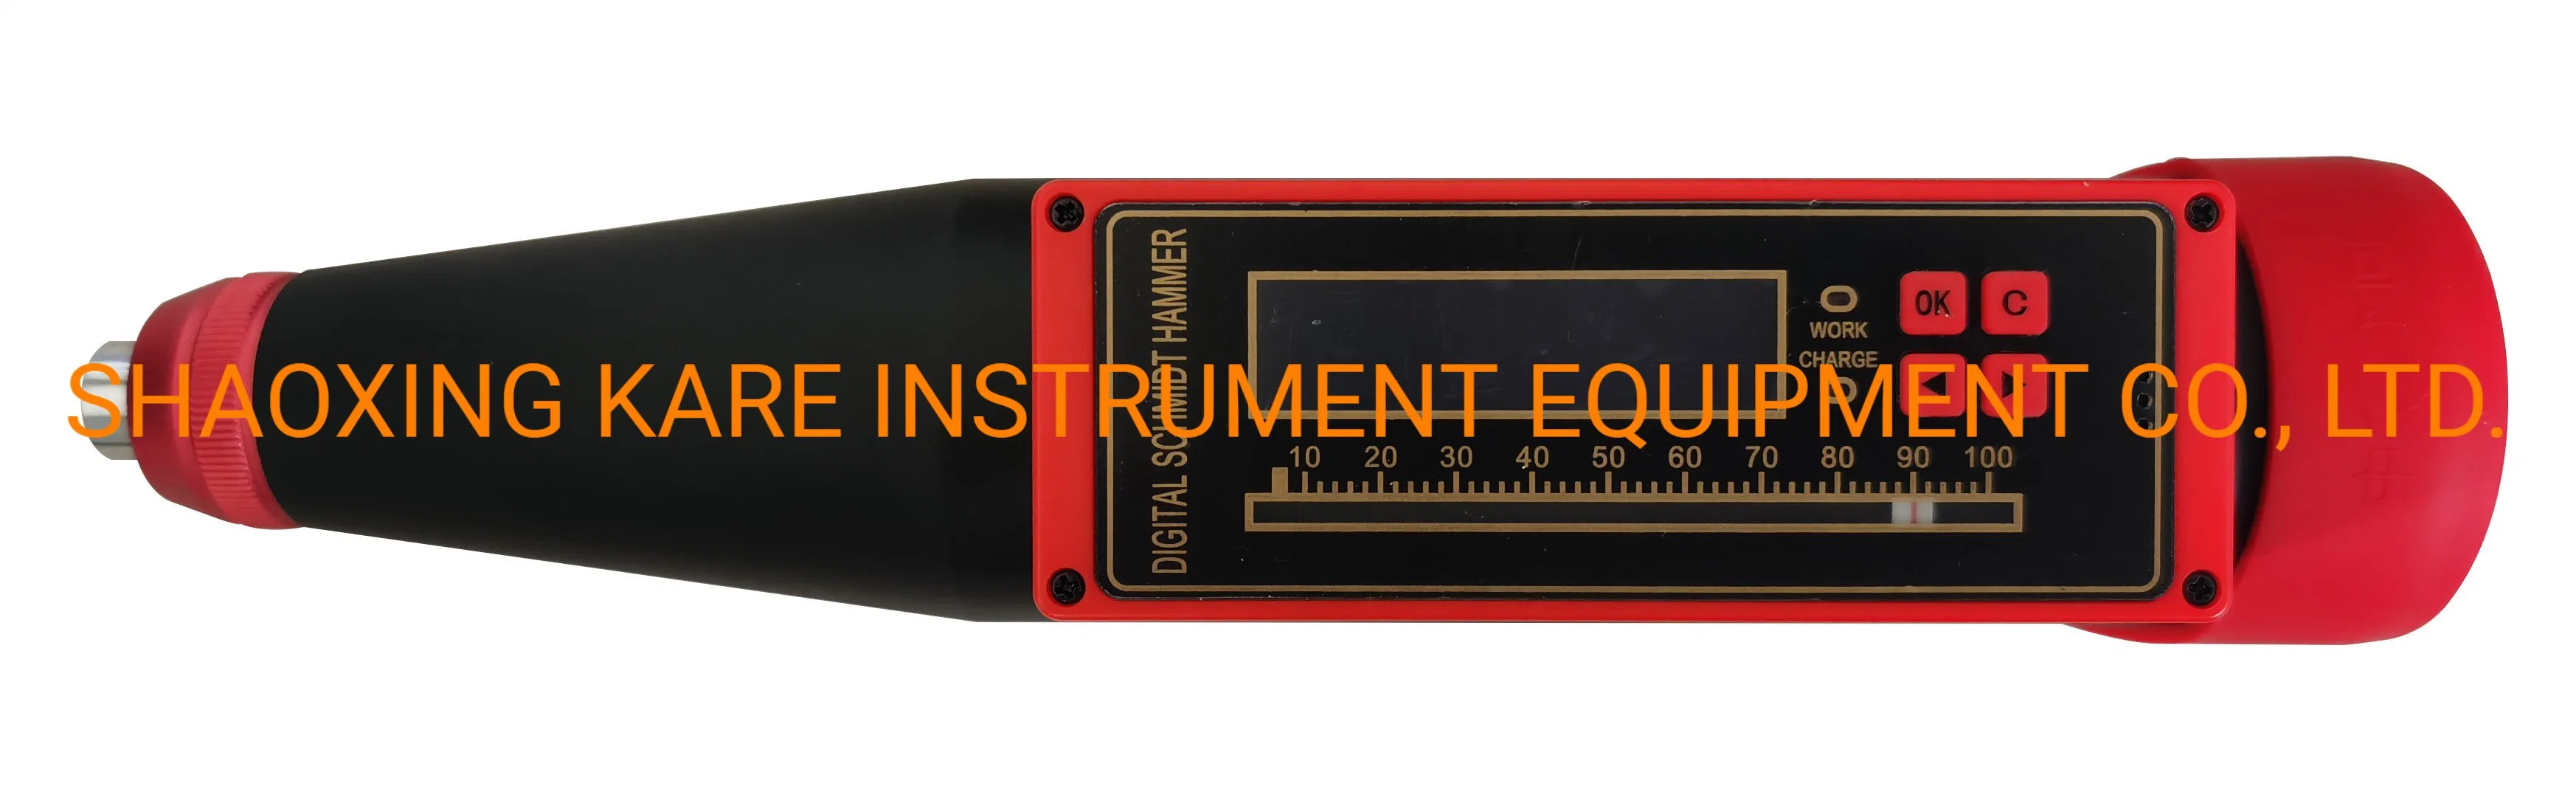 Digital Schmidt Hammer Lab Equipment, Resiliometer Test Equipment